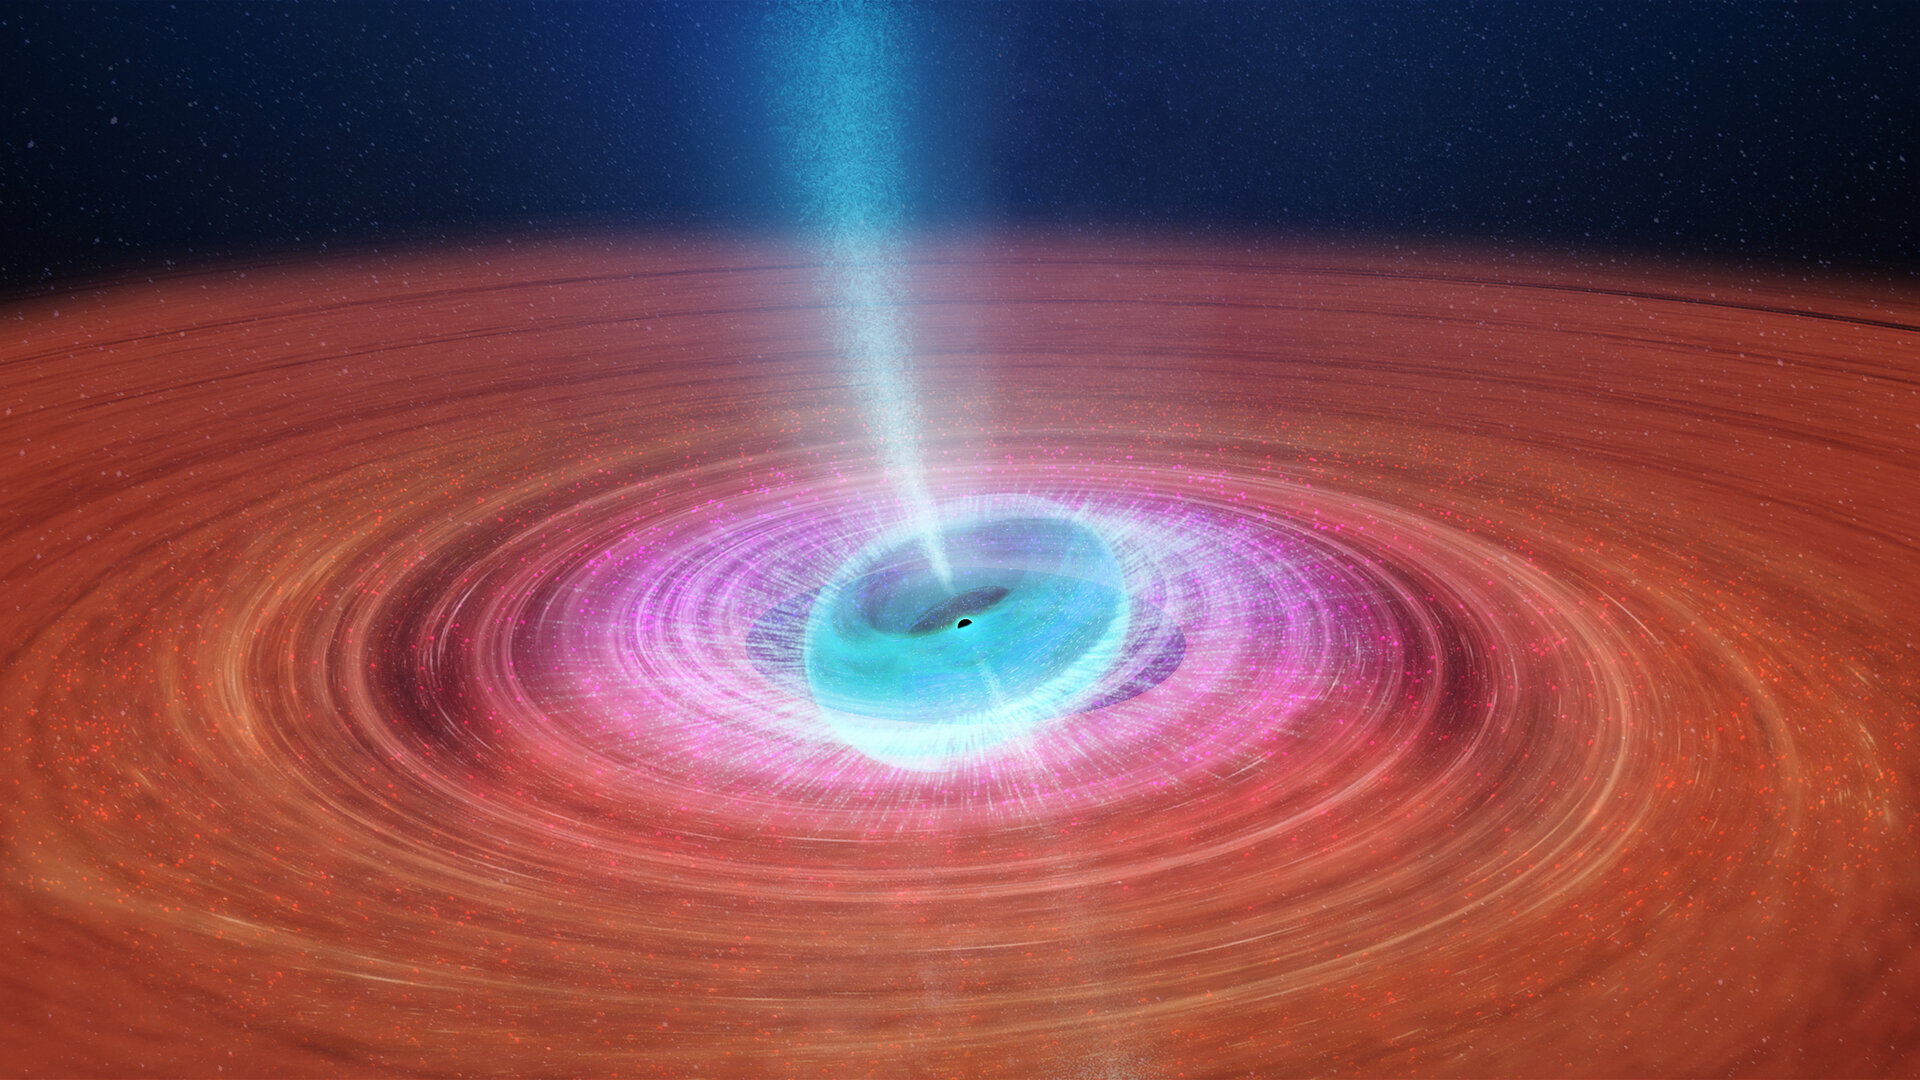 Tilted black hole accretion disc